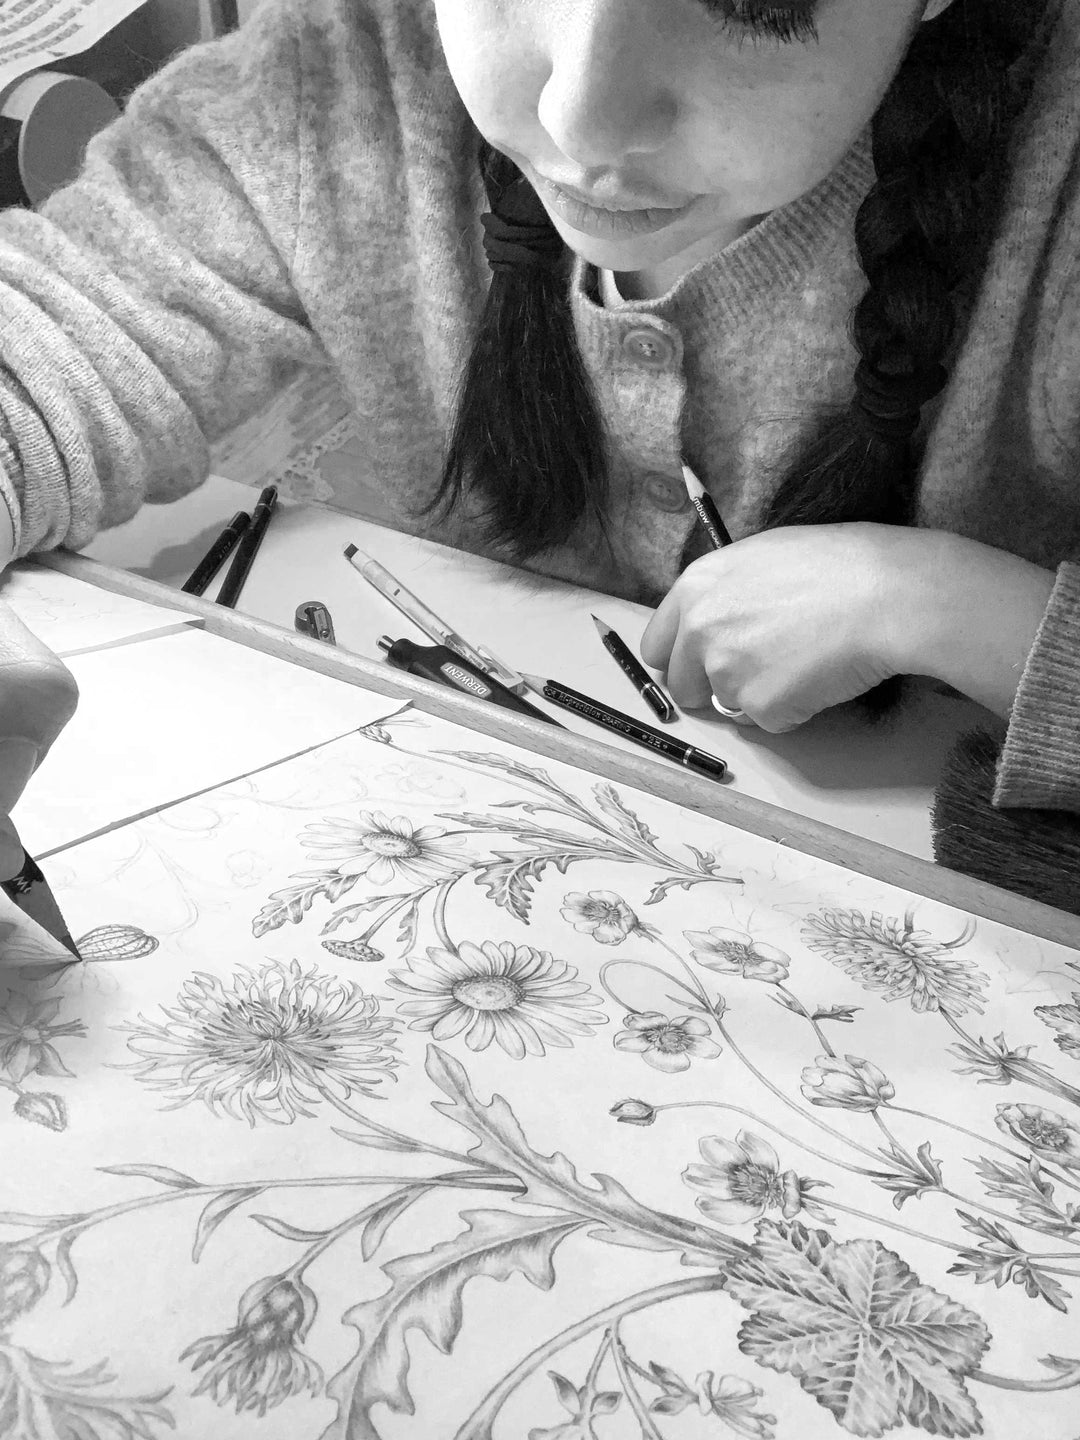 Studio-Le-Coq-the-lost-garden-wallpaper-ecru-soft-cream-base-botanical-hand-drawn-illustration-sprinf-florals-daisys-fern-leaves-pattern